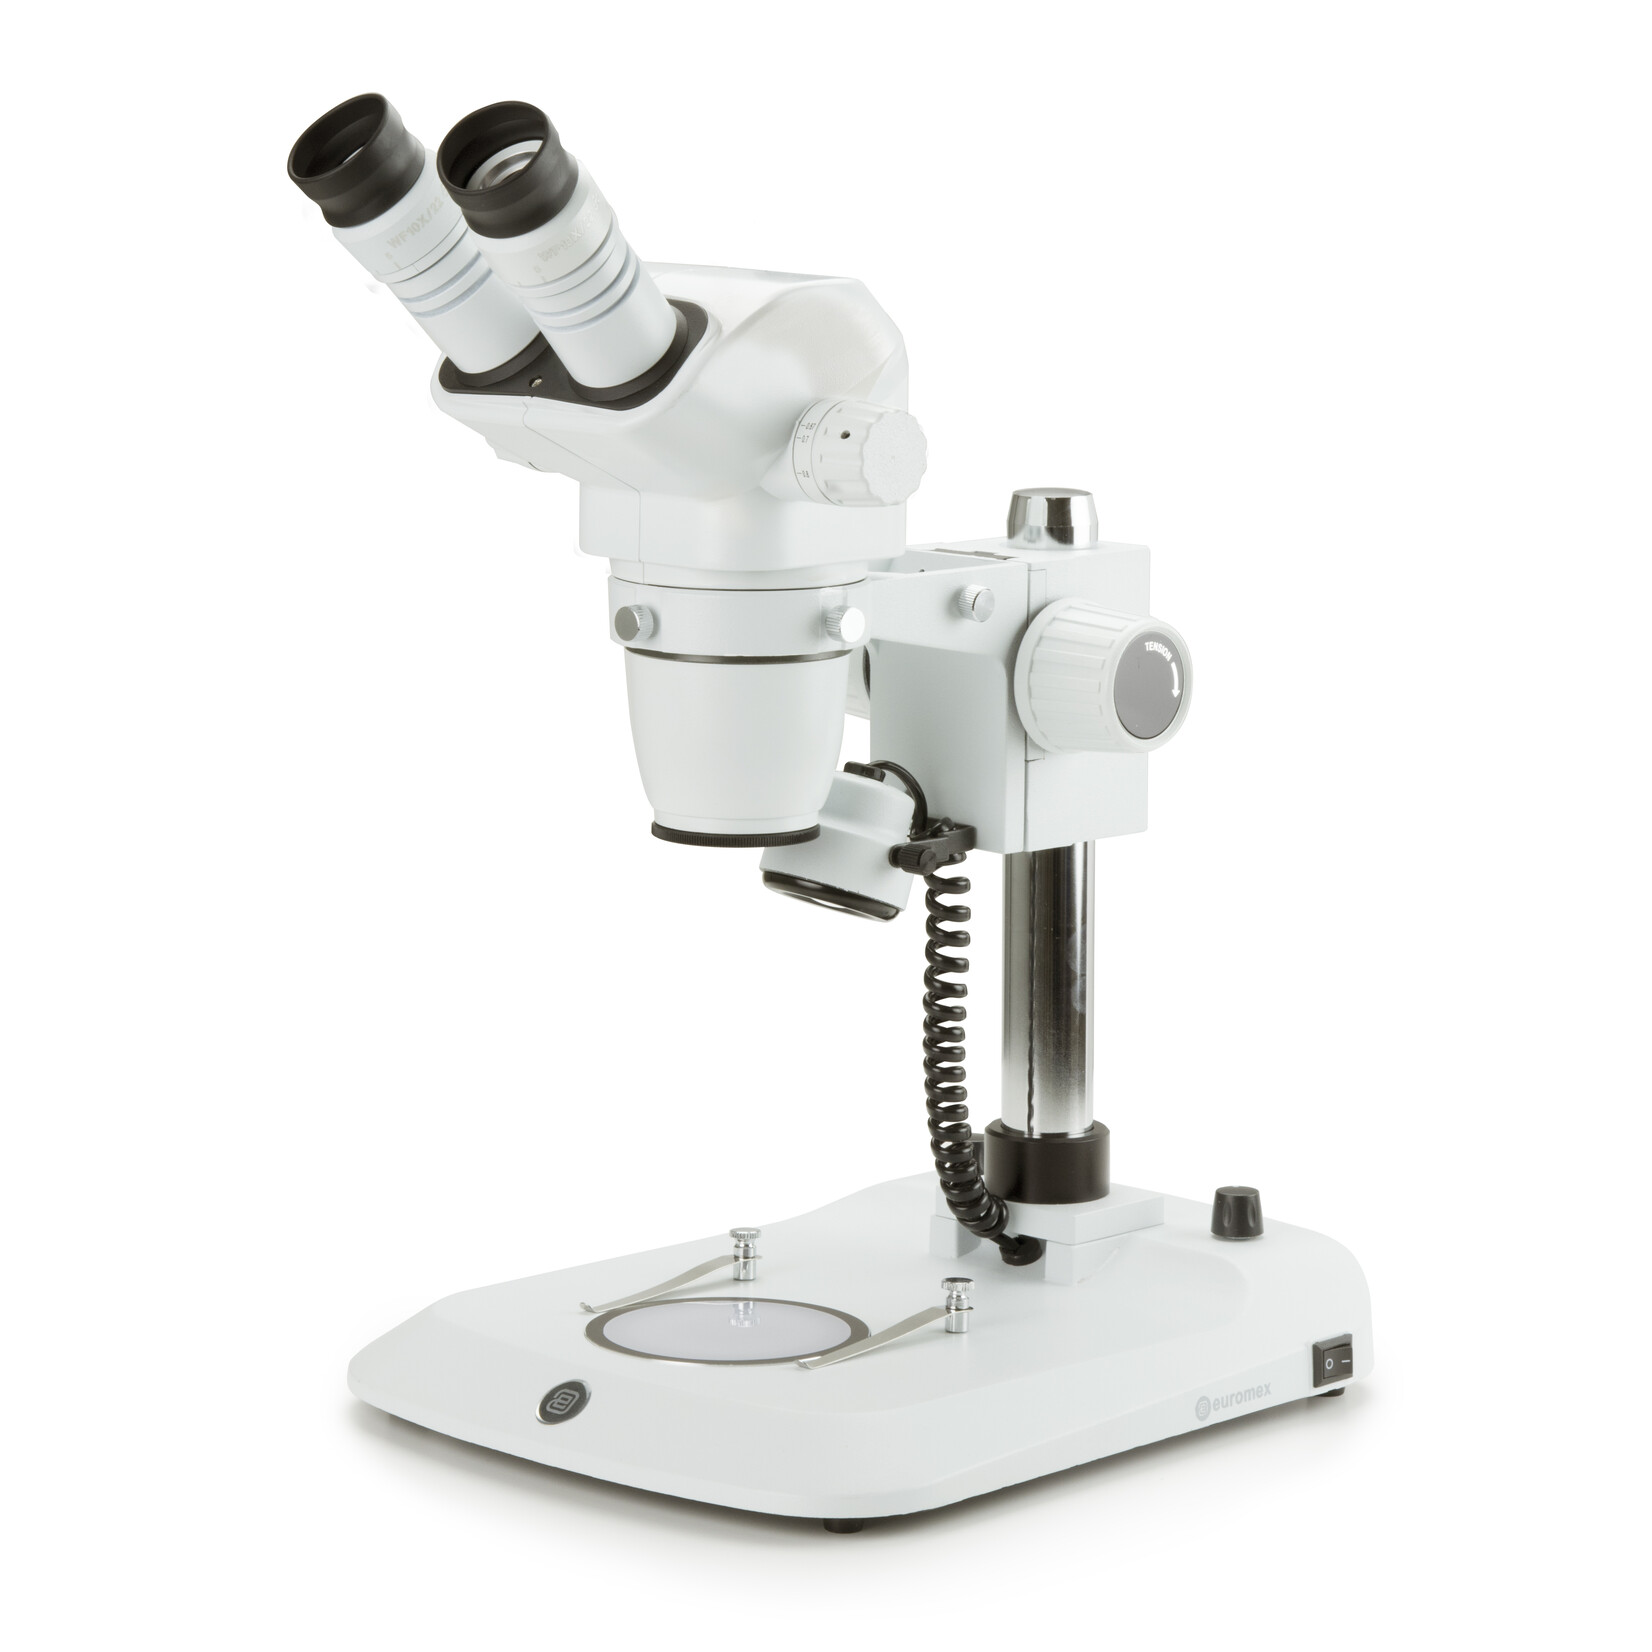 Microscopio binocular con zoom estereoscópico NexiusZoom, objetivo zoom de 0,67x a 4,5x, aumento de 6,7x a 45x con soporte de columna